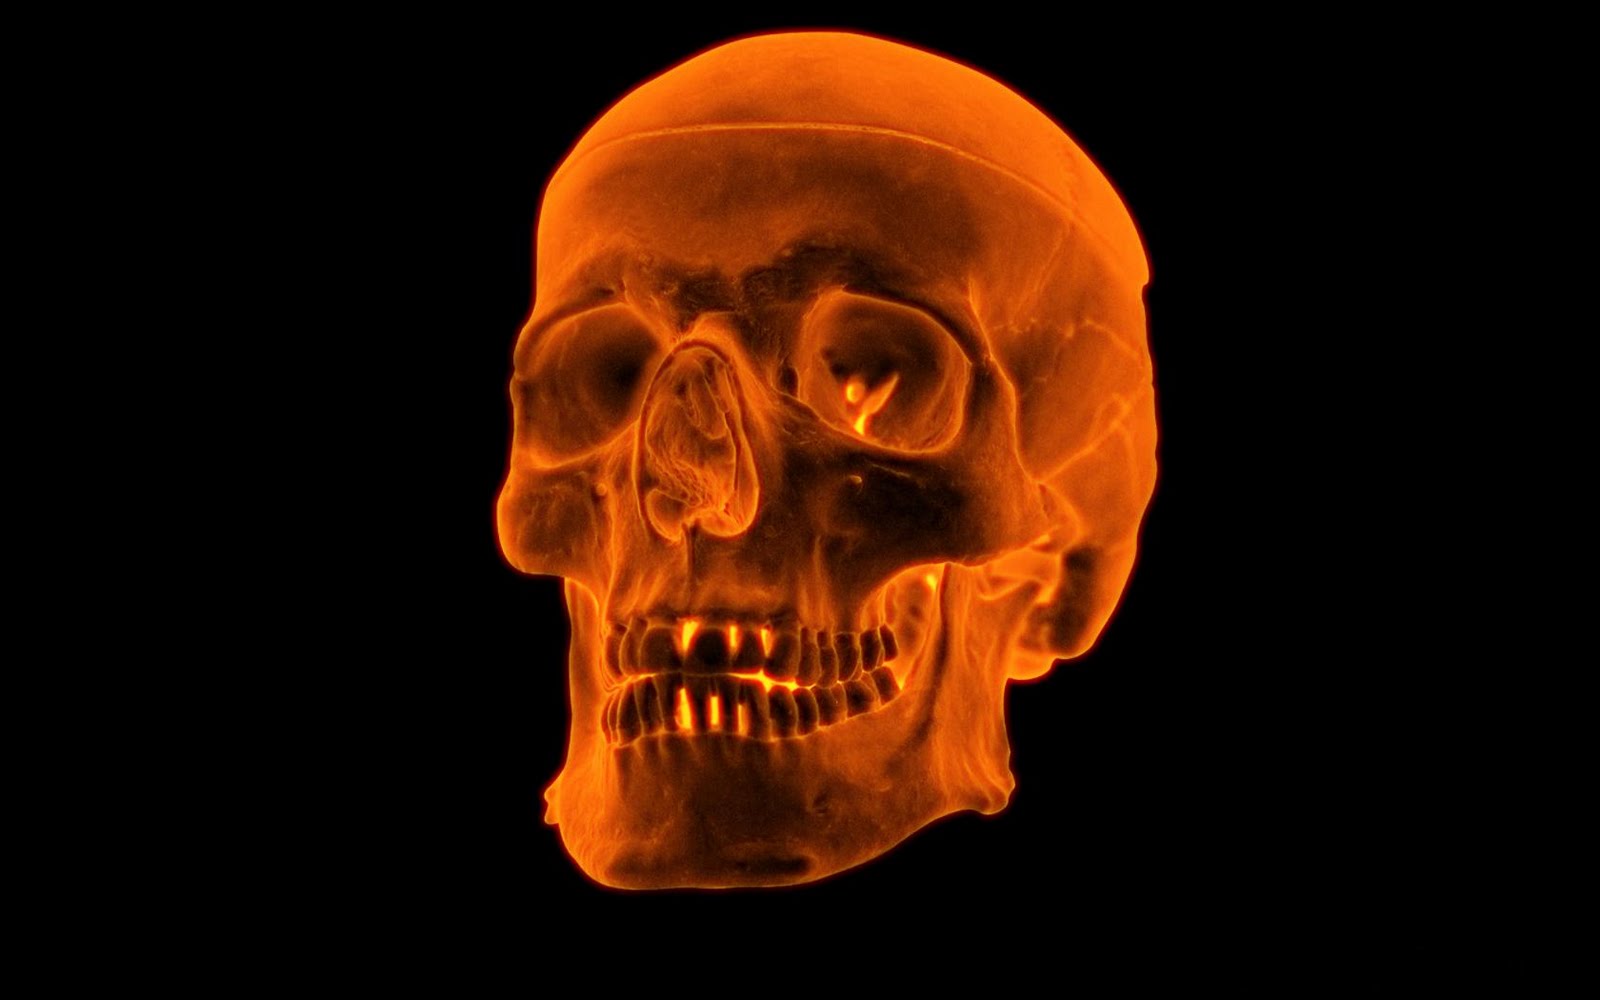 https://blogger.googleusercontent.com/img/b/R29vZ2xl/AVvXsEjtbGTZXTI_tBtAn7zSlRQCZCRi0E3lBHf8wRLo7Vbmtv5Jt60oMj6PWLVP0qSWvo64wNFjPOjt9gVaRgwoUYbWYFuEeTjWfWCALGQTxhkDNzSRs4t3PsqjwdWJ58aiYGlf-O4ECn0h8BJN/s1600/3D-Fire-Skull+(1).jpg